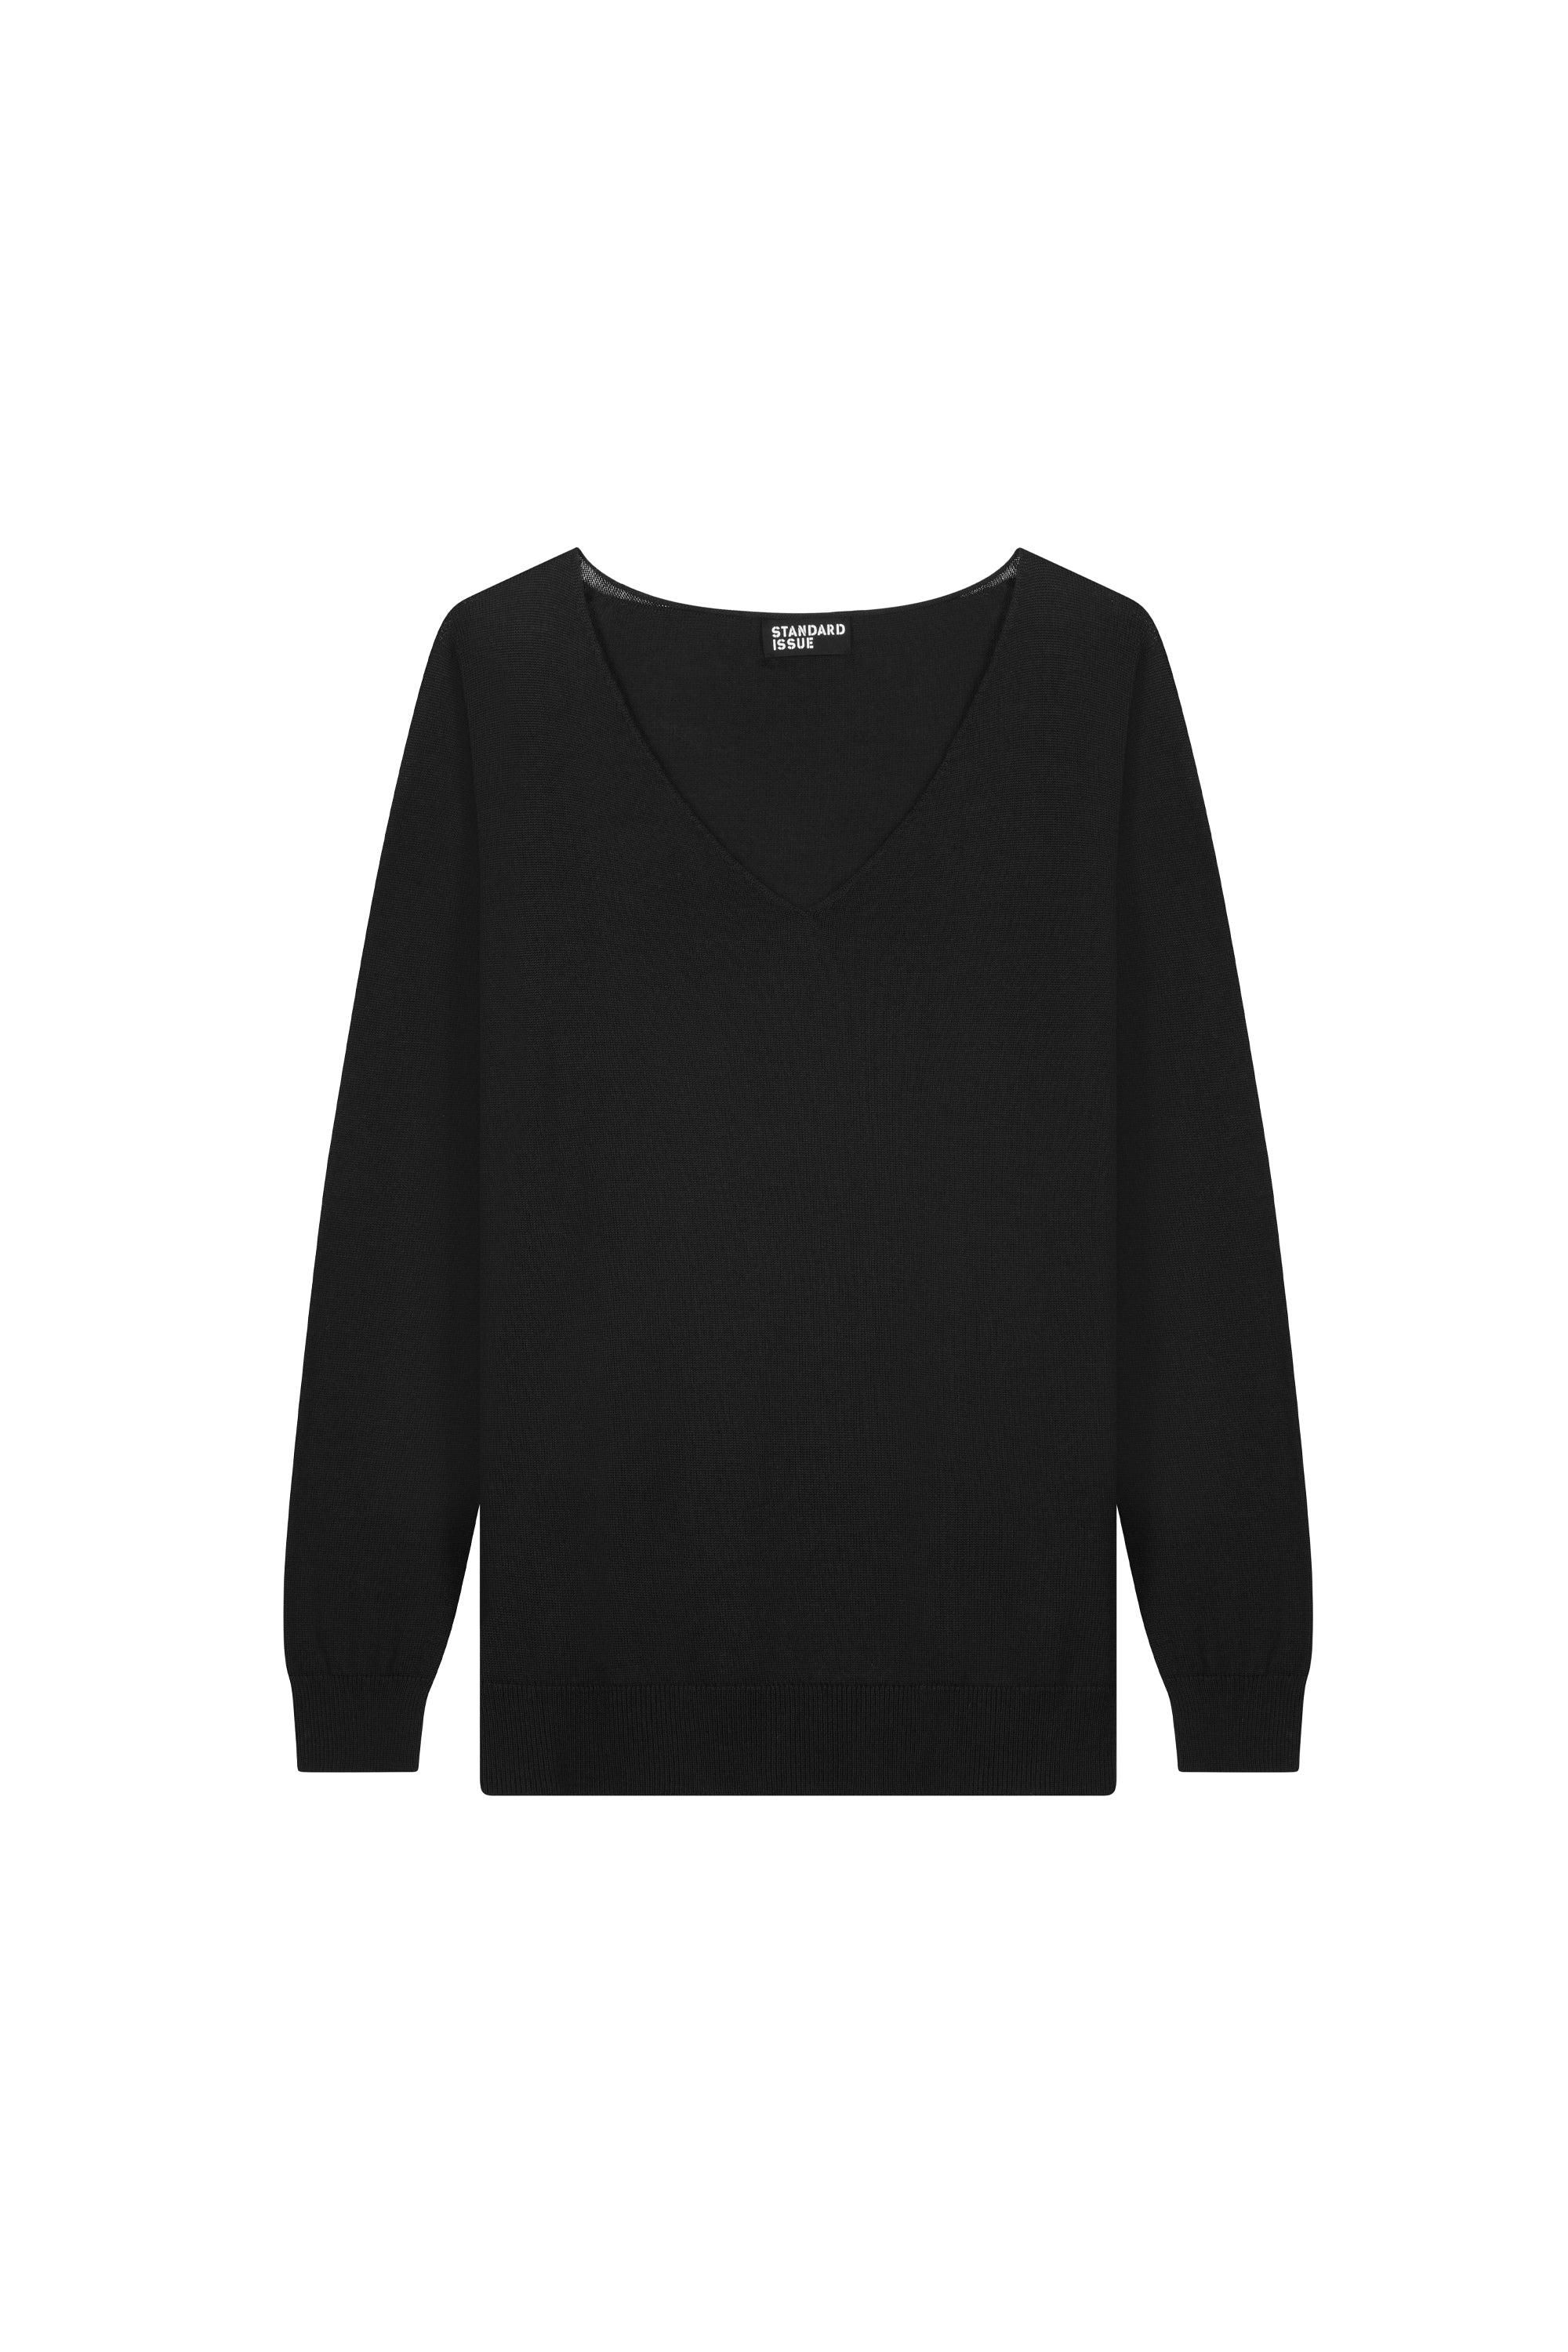 Standard Issue Merino V Neck Slouchy Sweater in Black